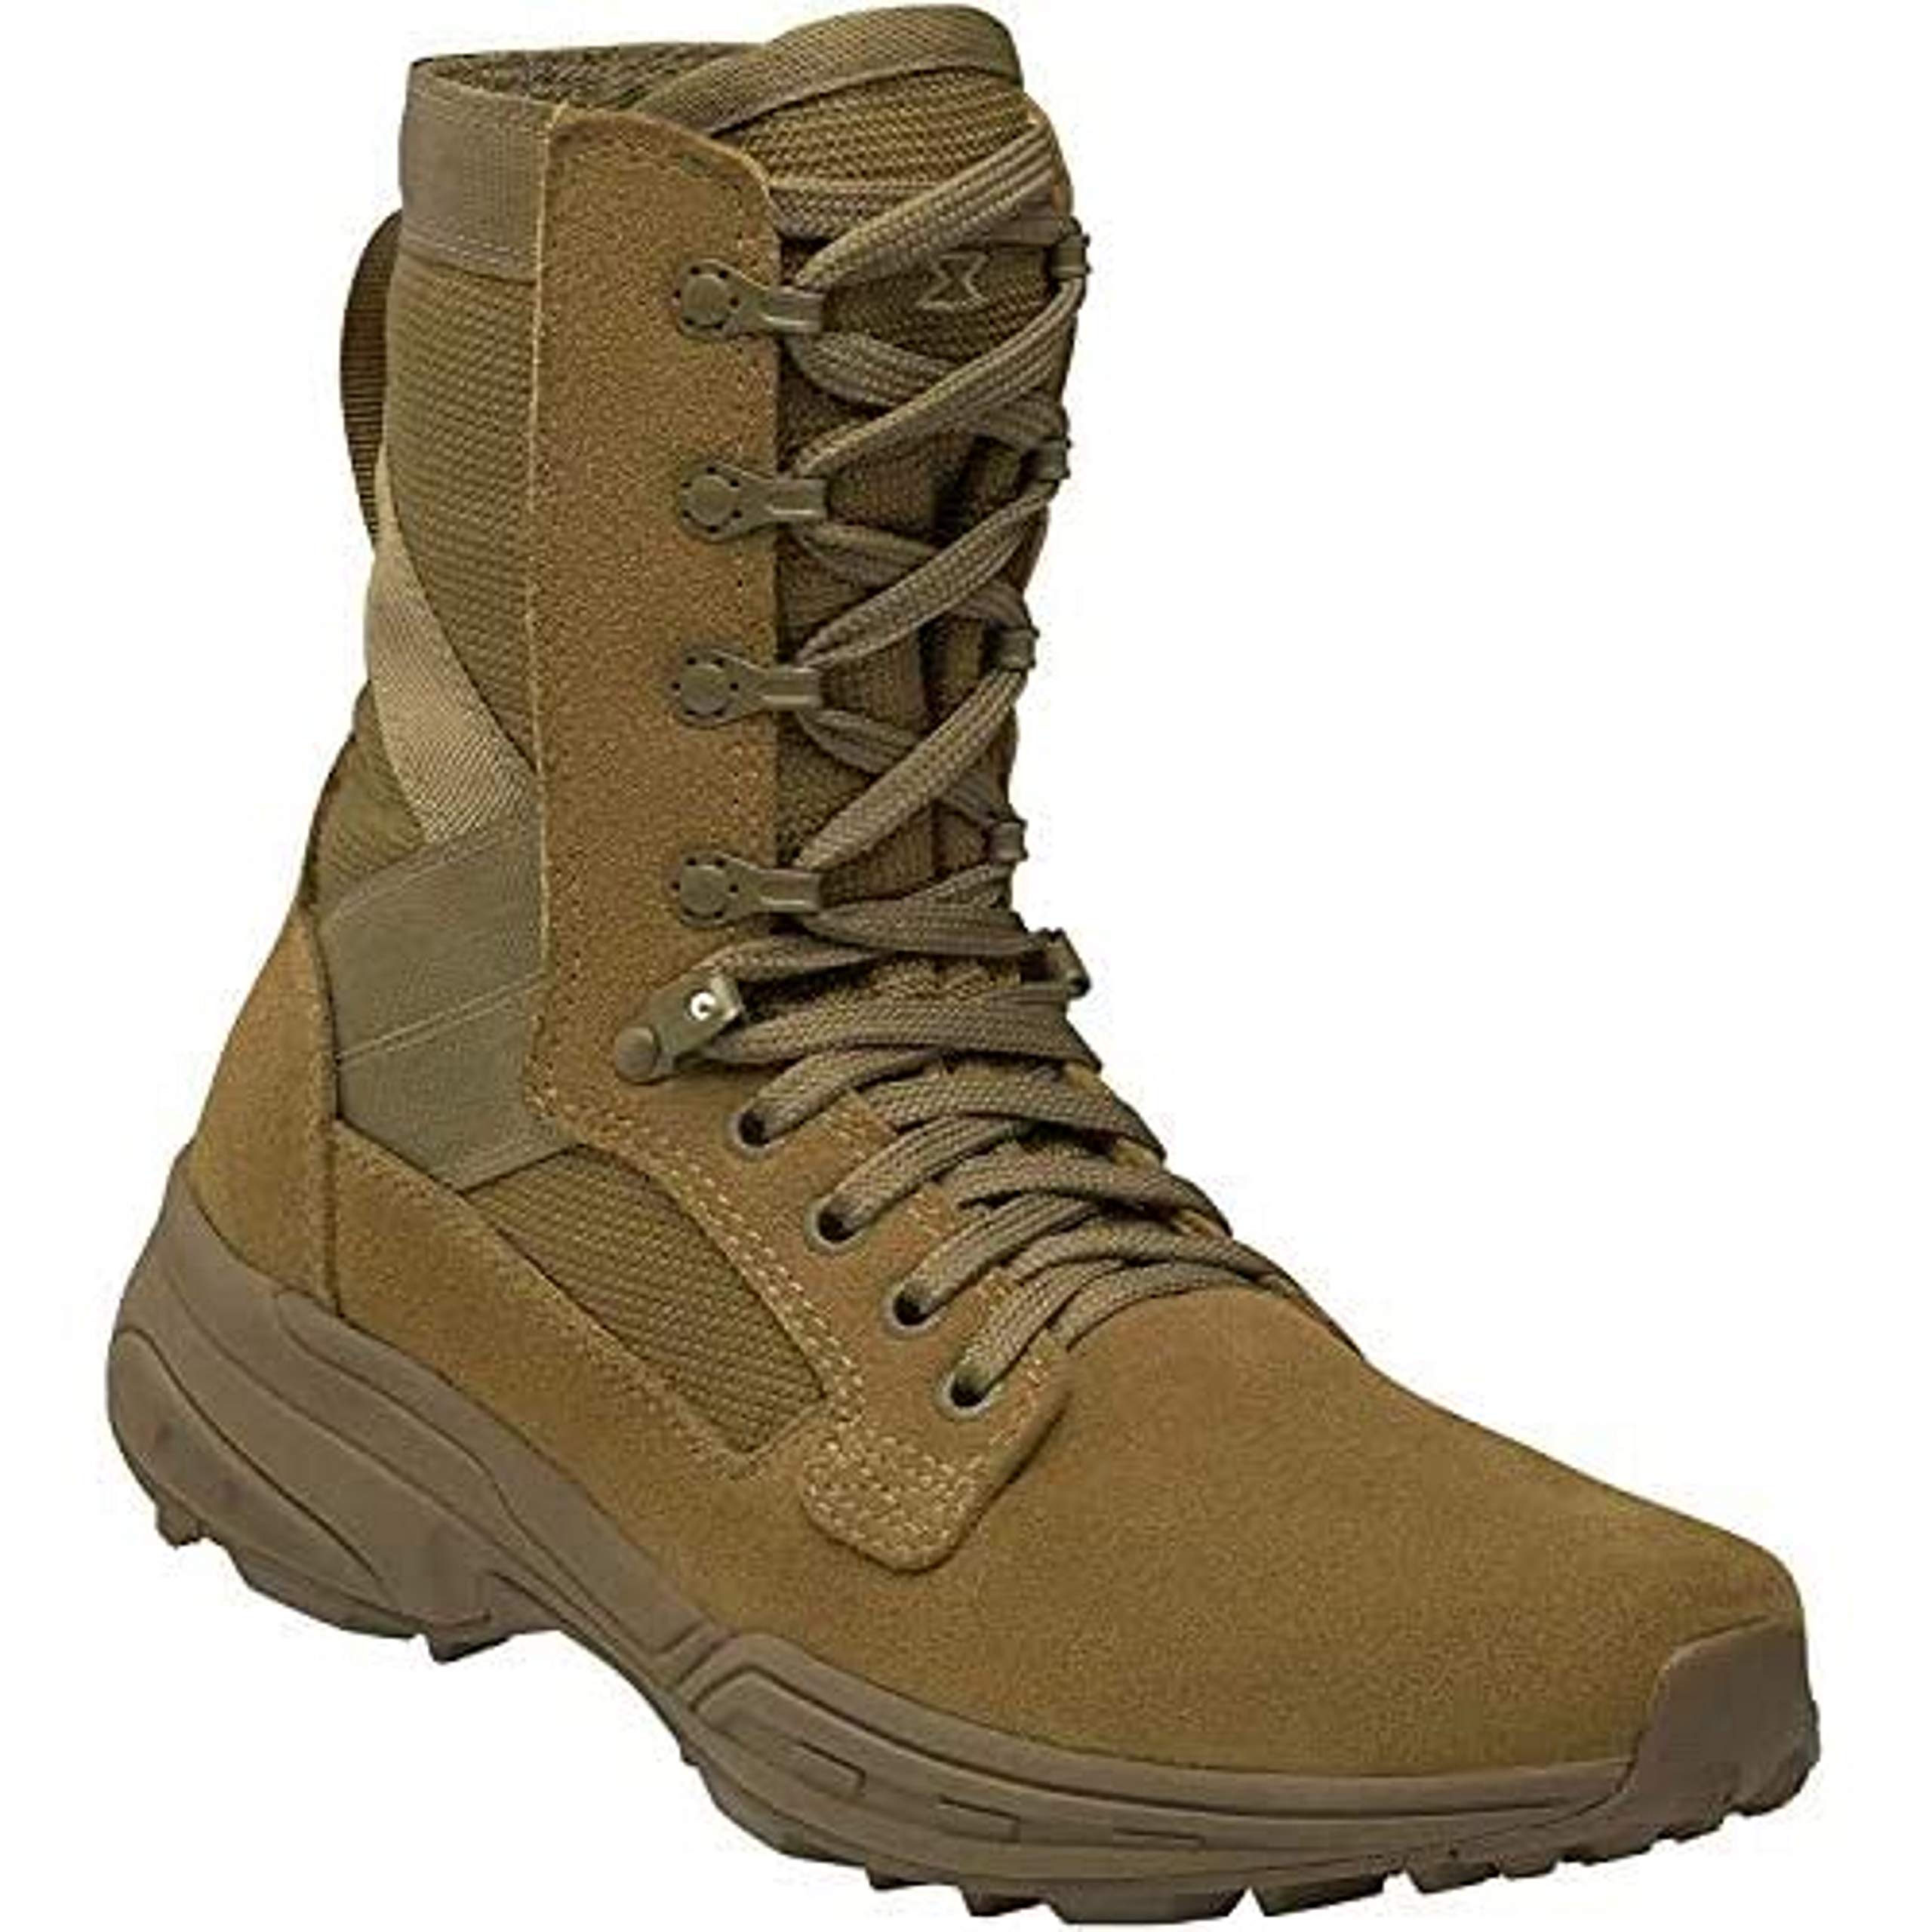 Garmont Mens Boots - Tactical 8 NFS 670 Regular - Coyote - 9.5